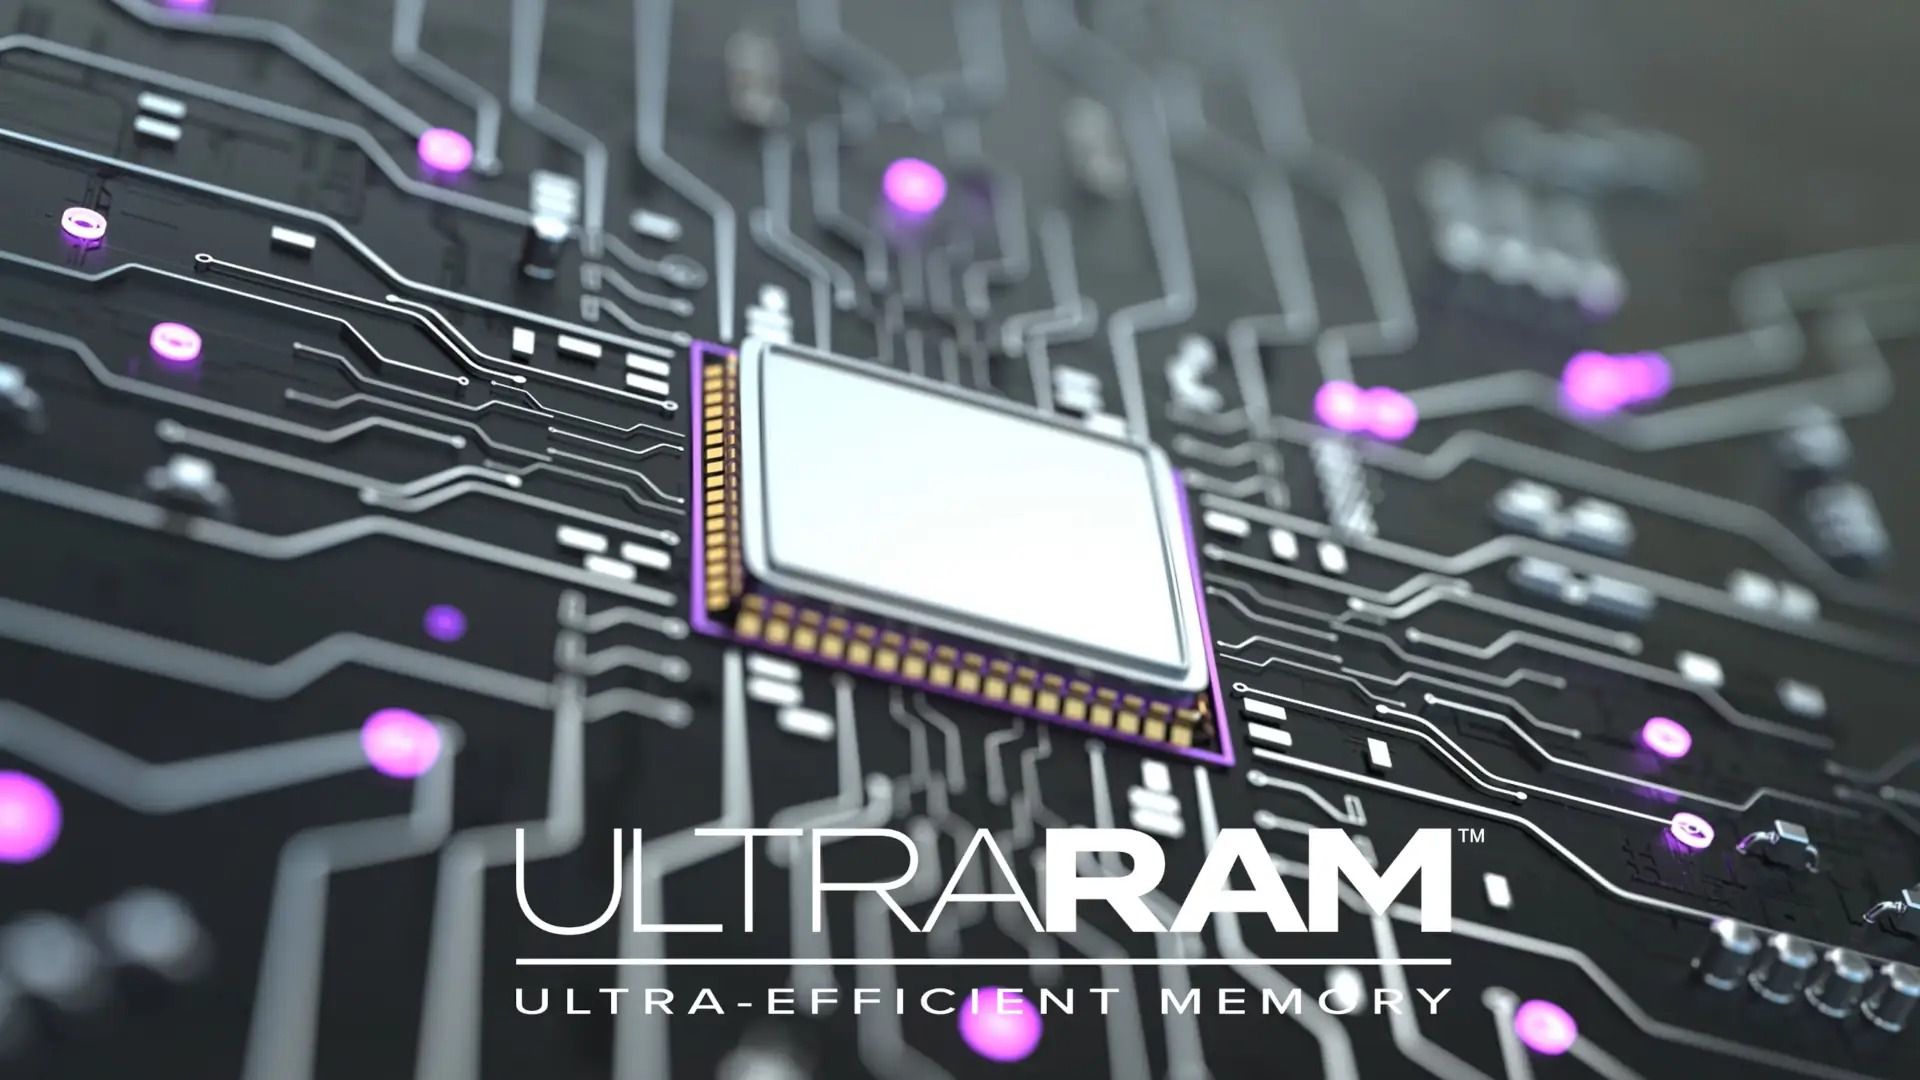 ULTRARAM: tecnologia que une RAM e SSD pode revolucionar seu PC - Canaltech